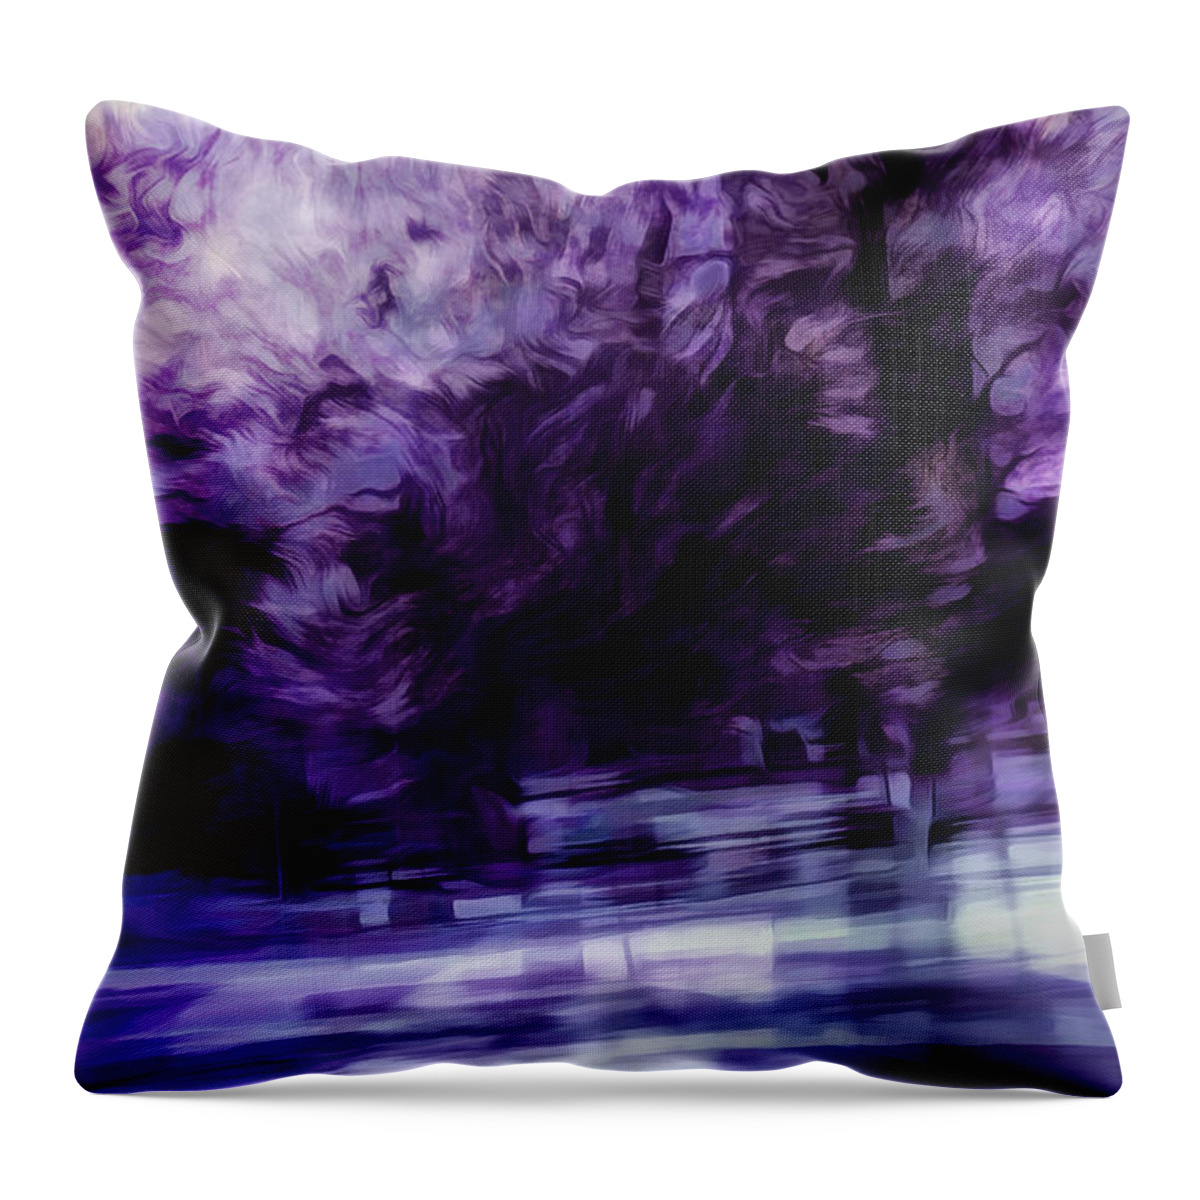 Purple Throw Pillow featuring the digital art Purple Fire by Scott Norris